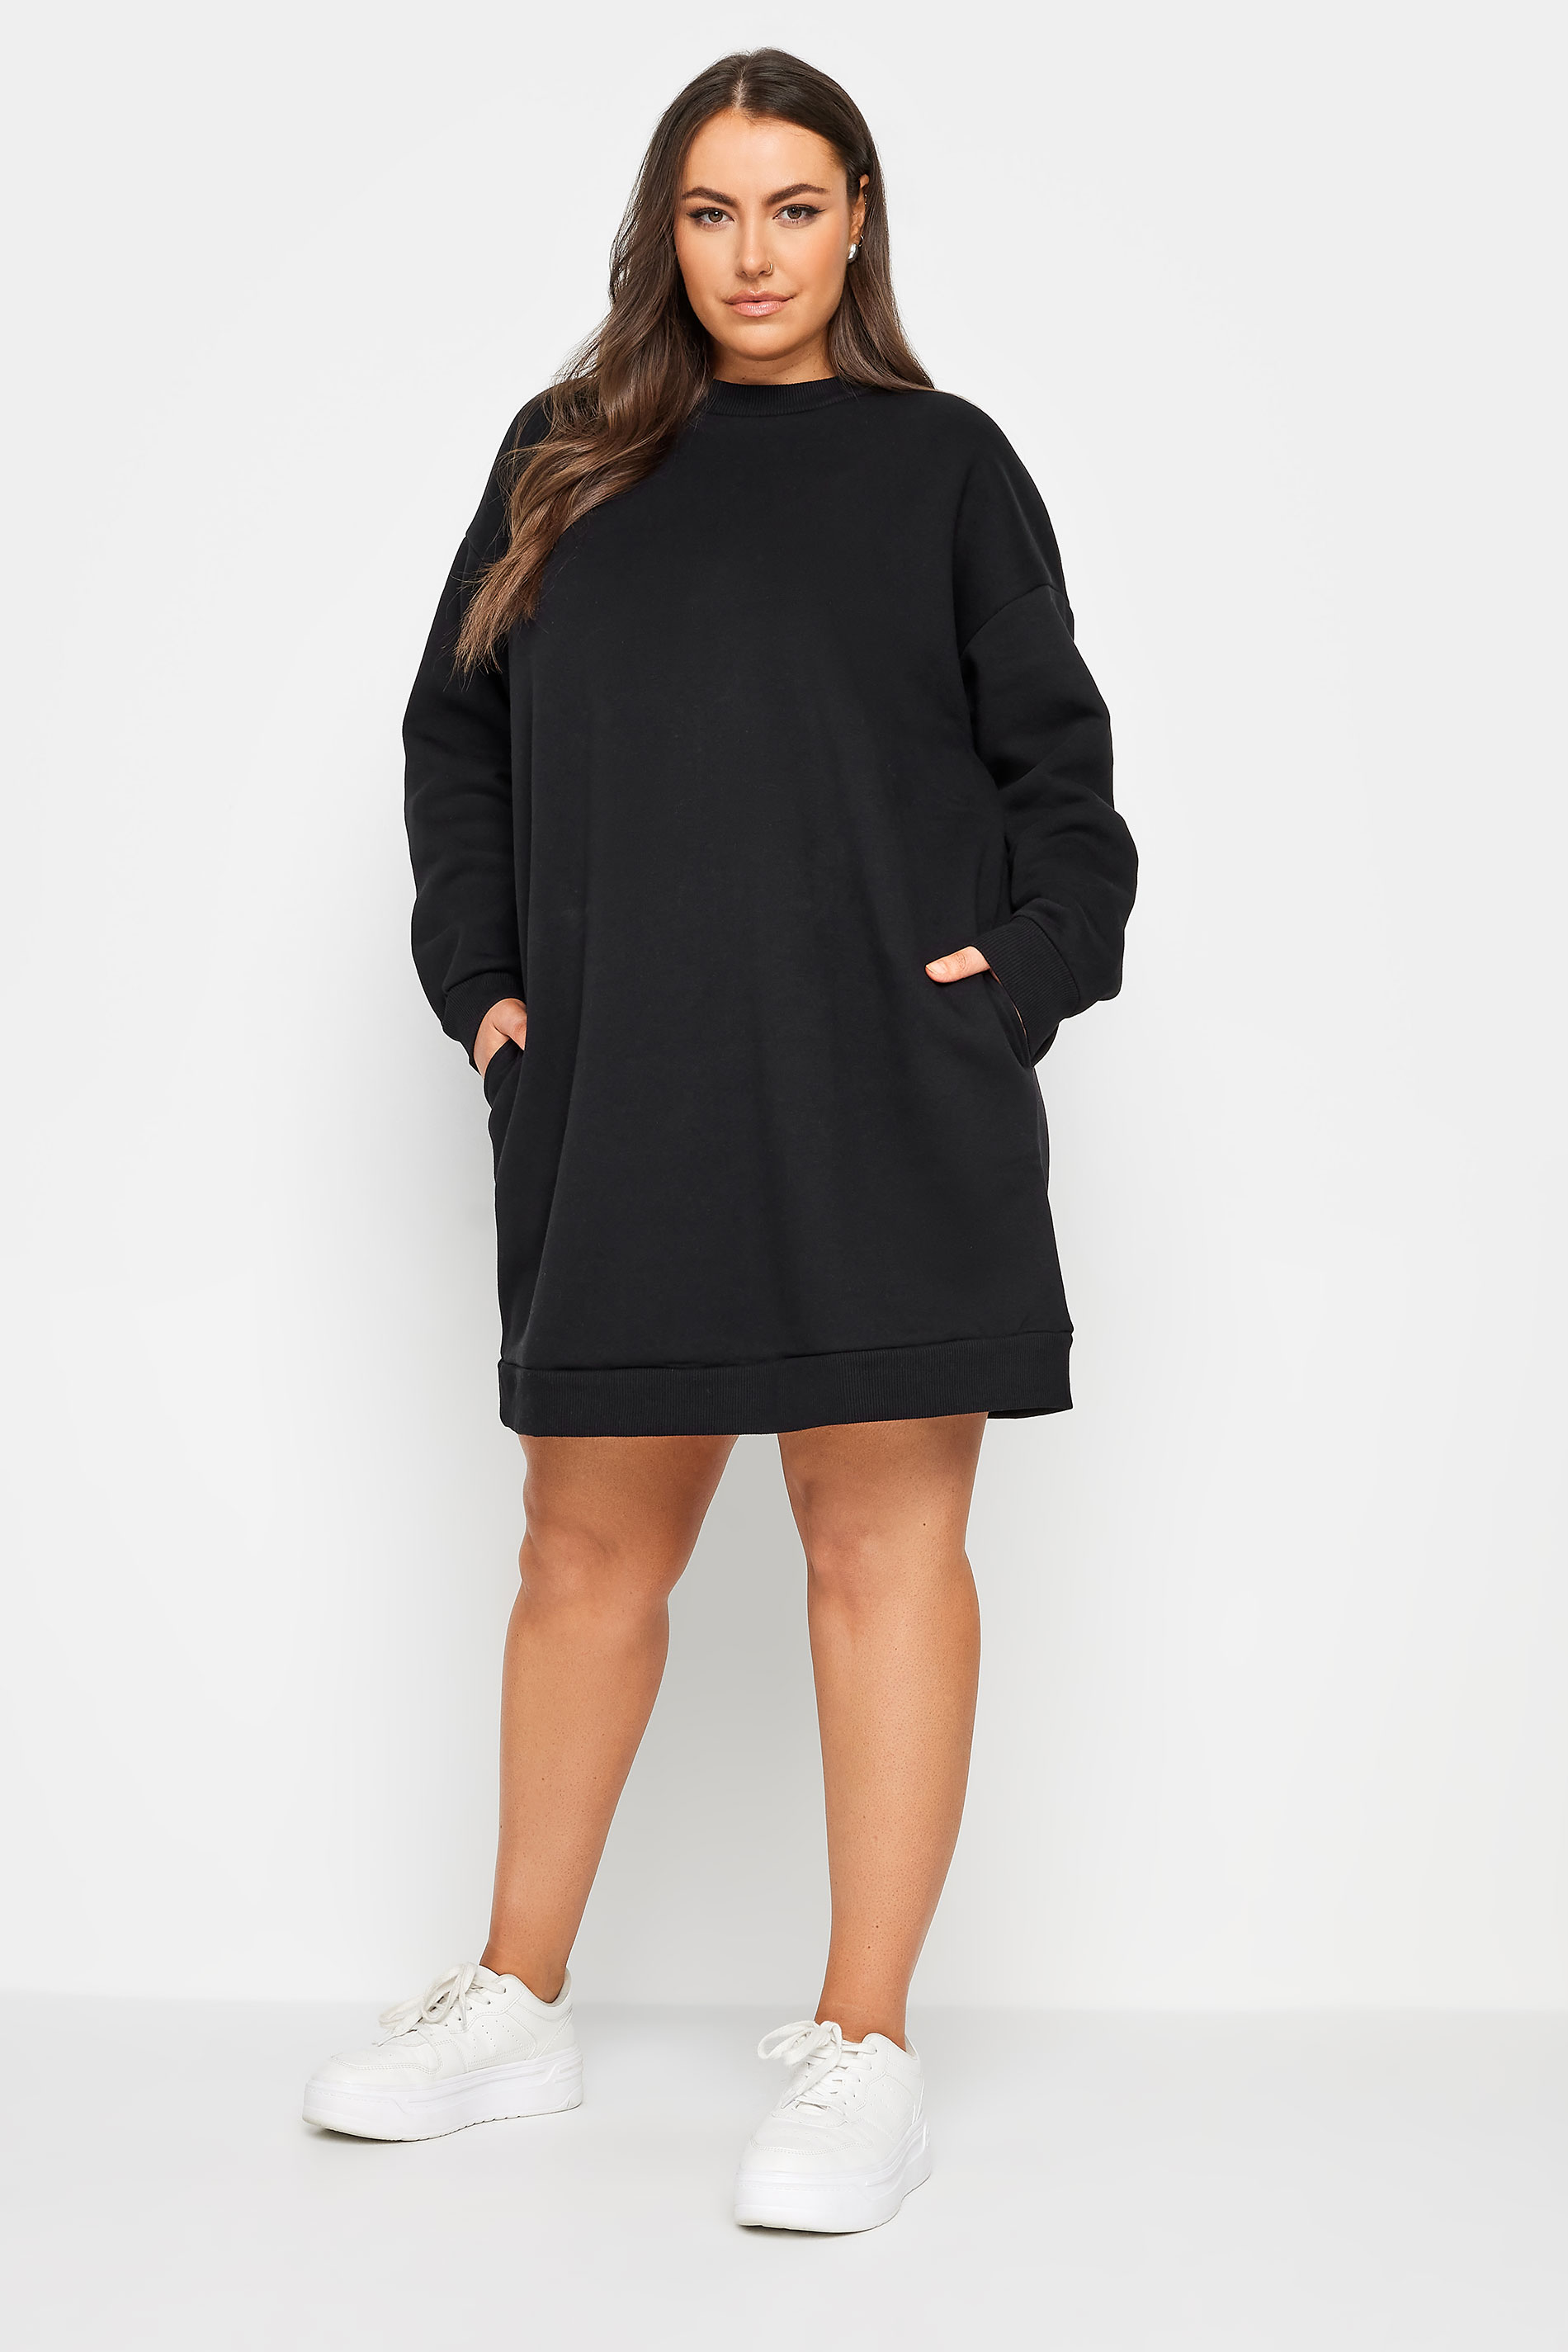 YOURS Plus Size Black Sweatshirt Dress | Yours Clothing 1